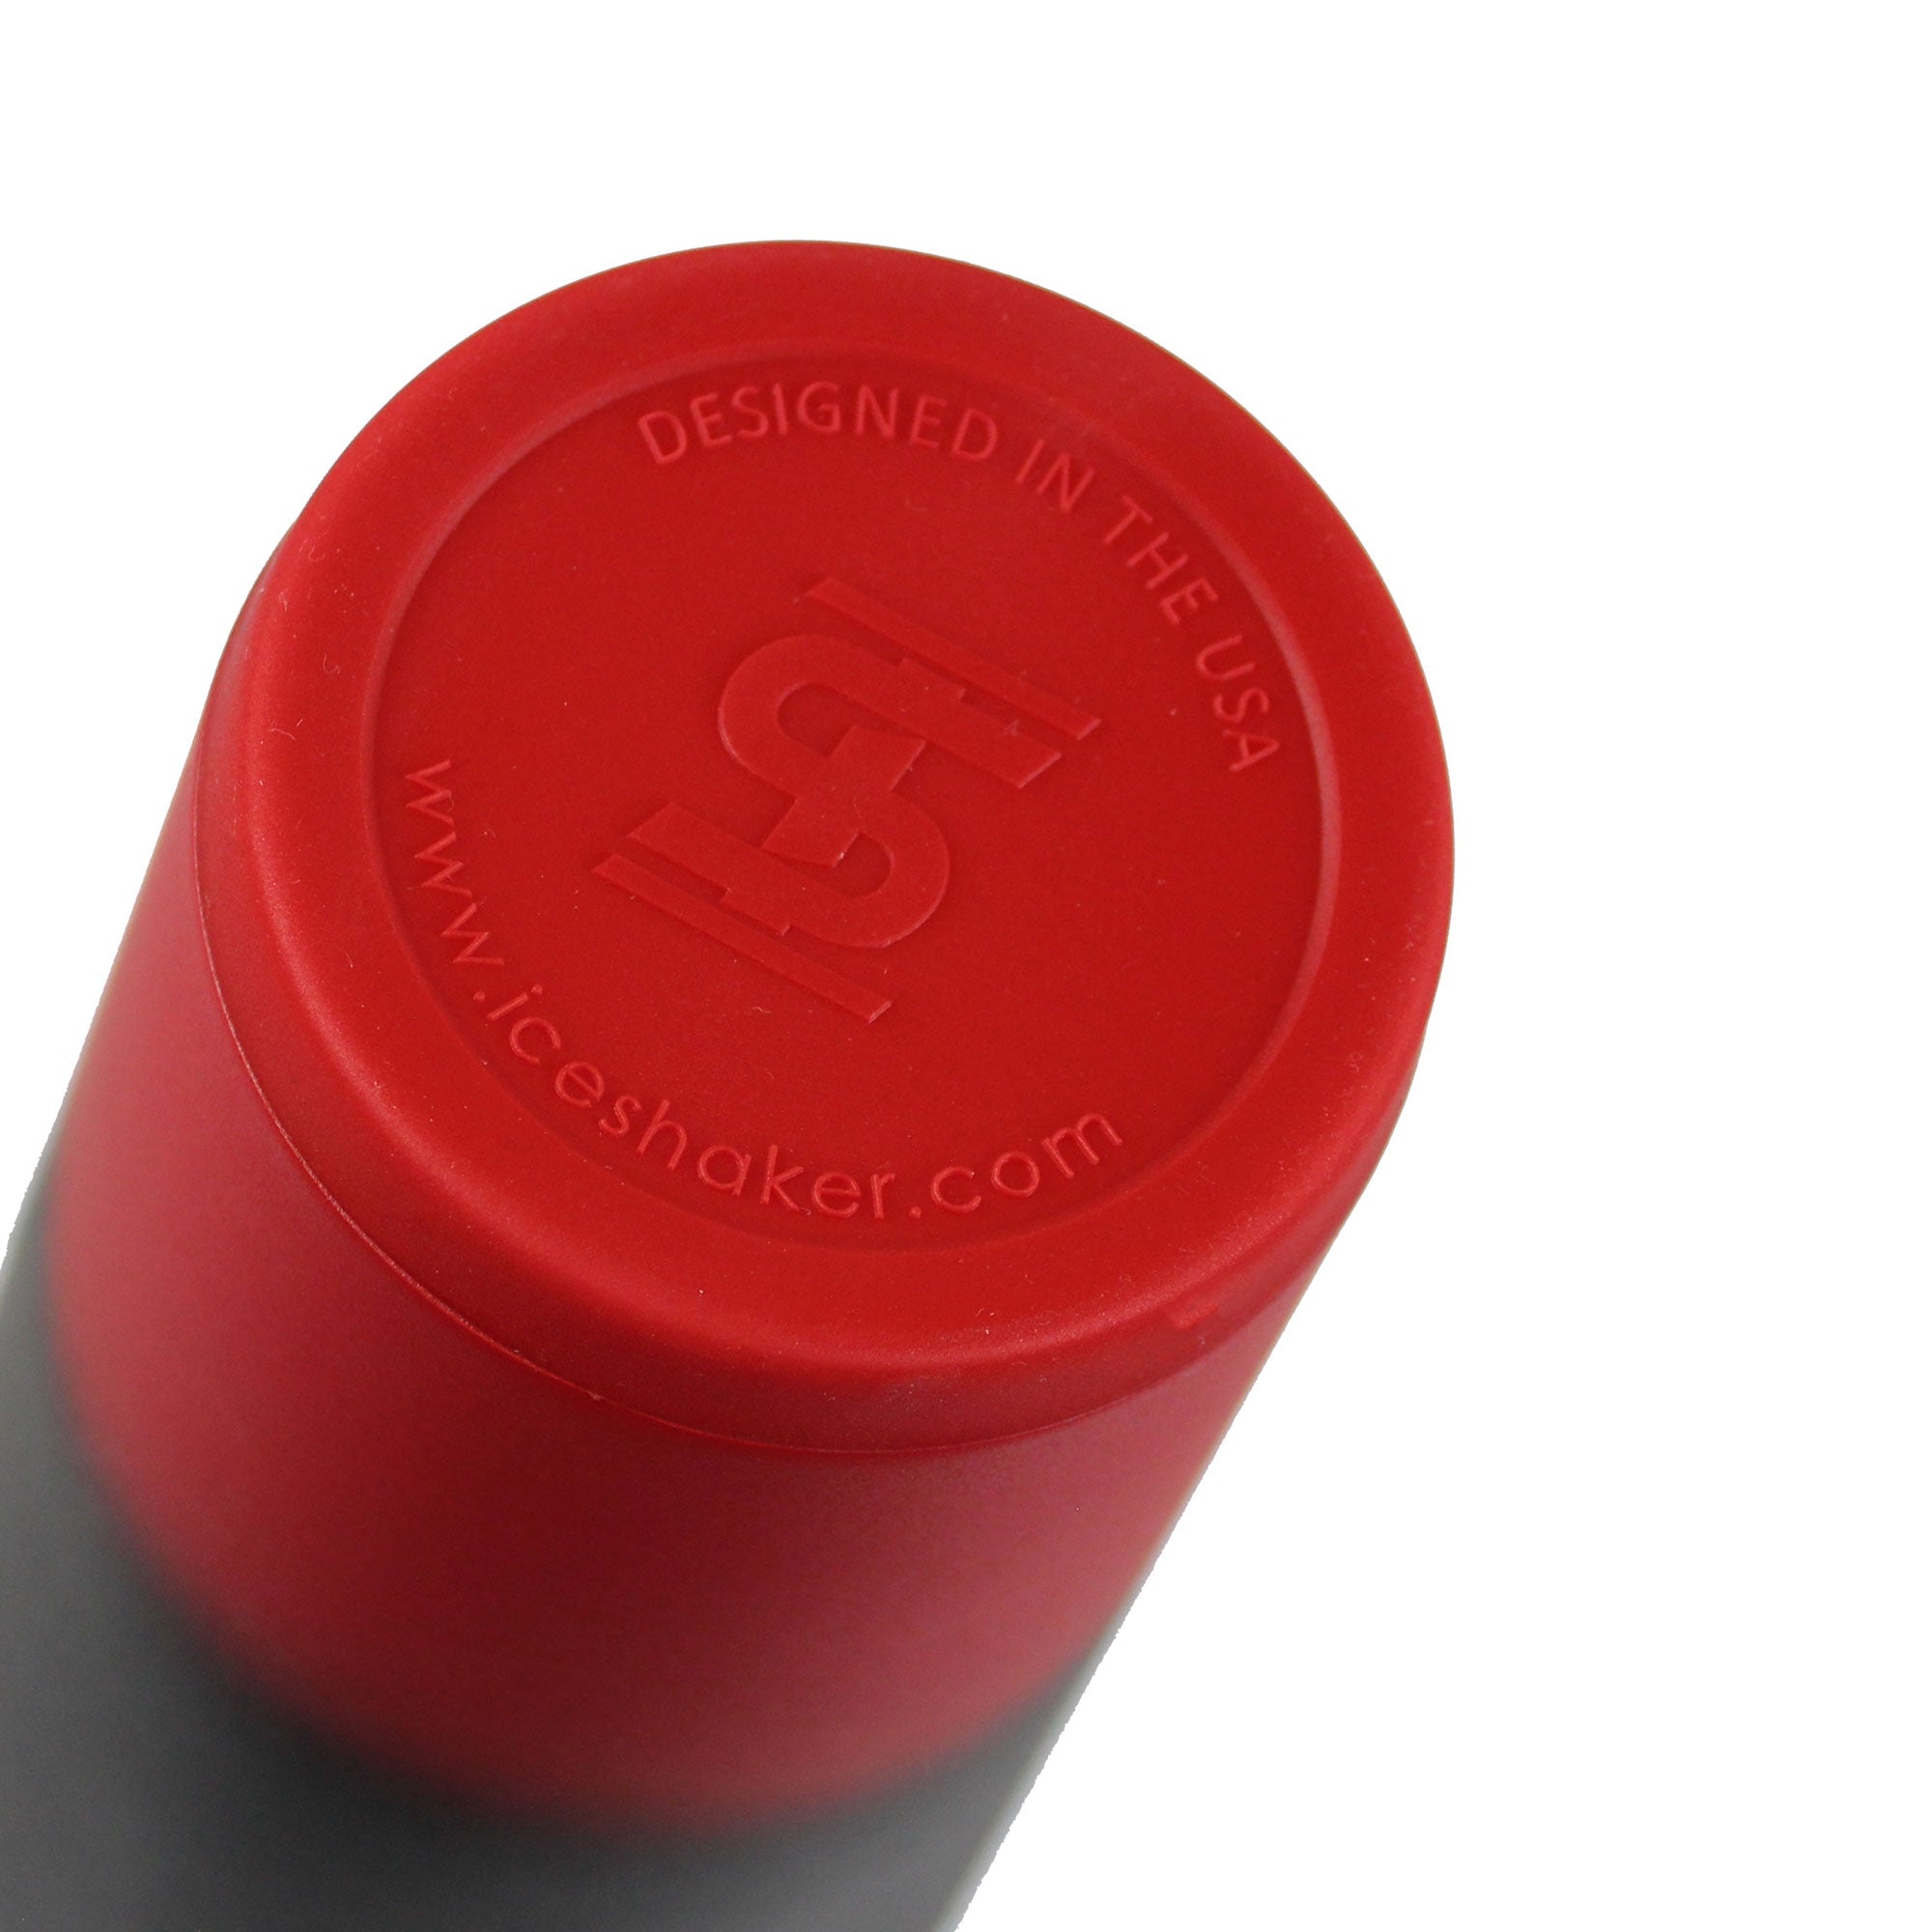 Born Primitive Ice Shaker Bottle (Red)